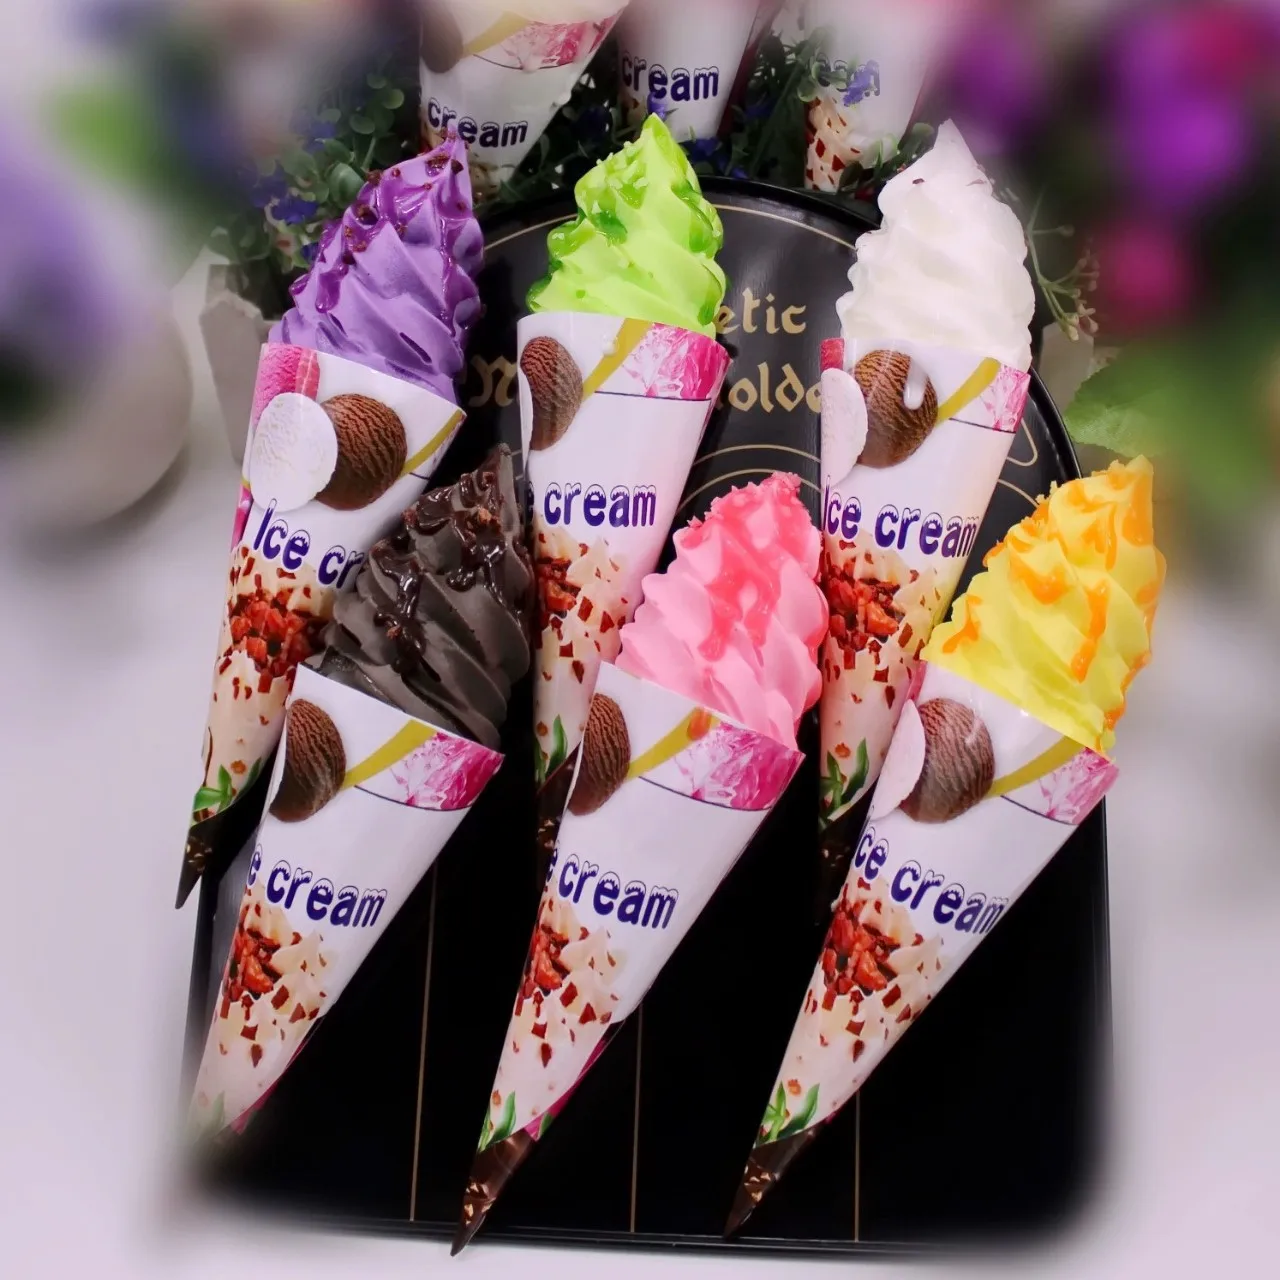 18cm Simulation Ice Cream Fake Cone Pu Ice Cream With Paper Hopper Photo Props Dessert Decor For Mall Window Display Kids Favors